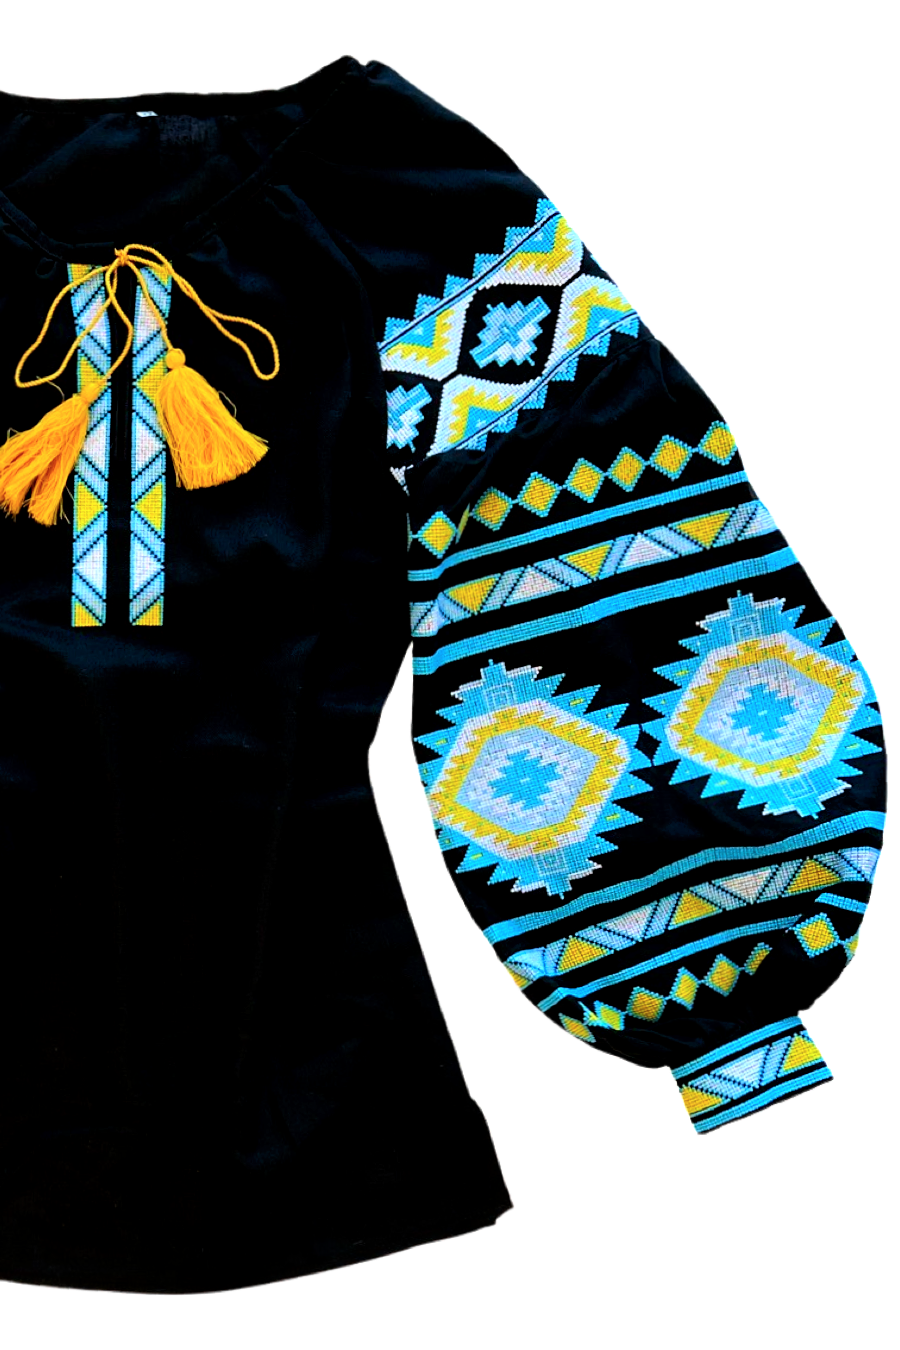 Ukrainian black blouse "Peremoha" Blue and yellow